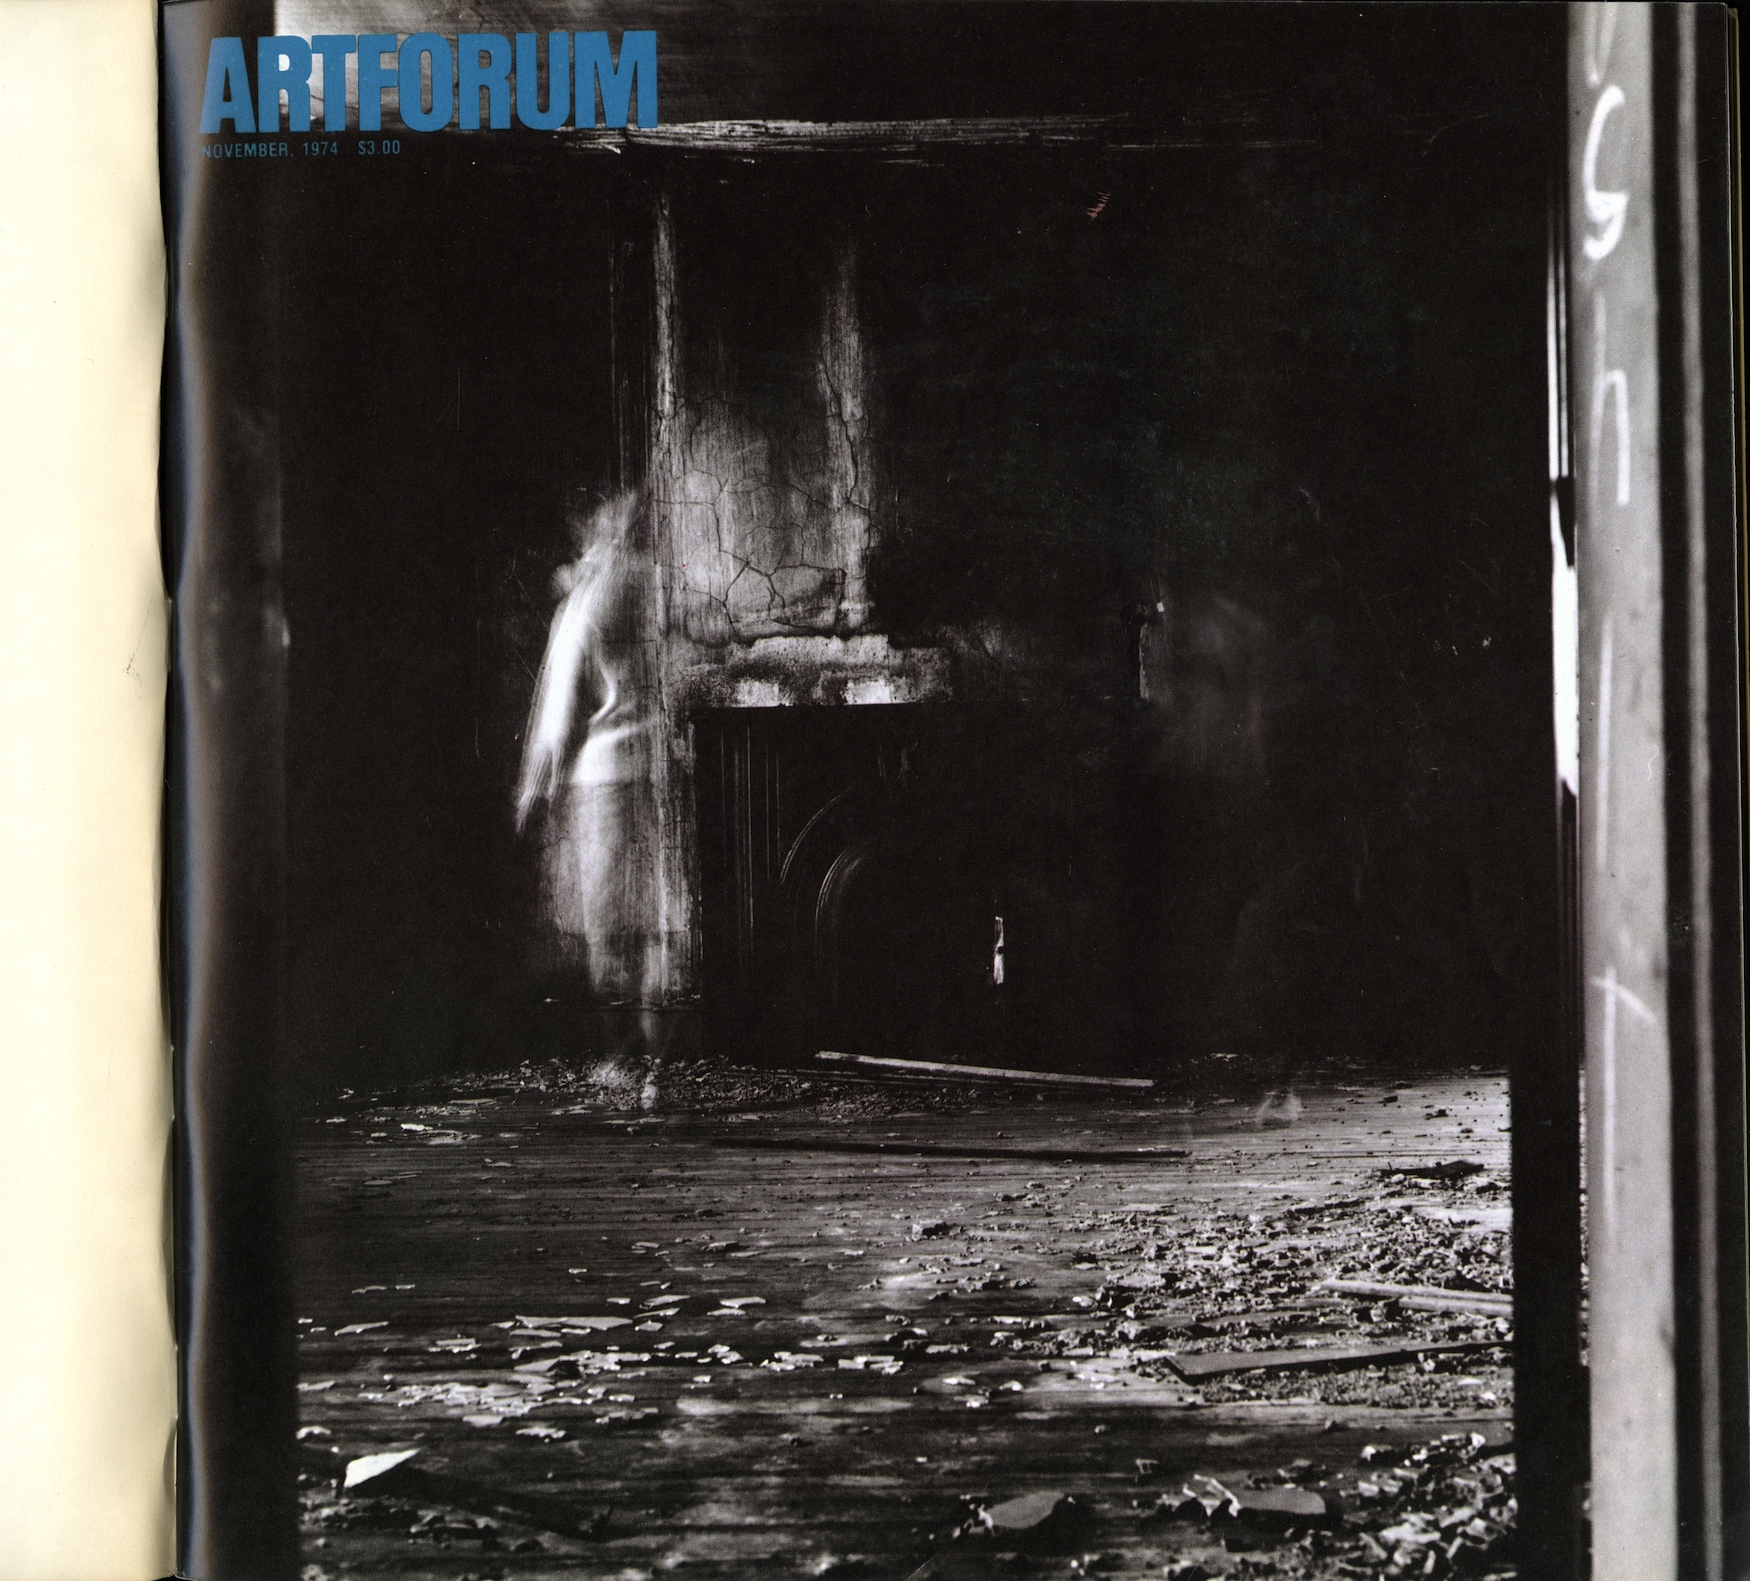 Helmut Lang – Artforum